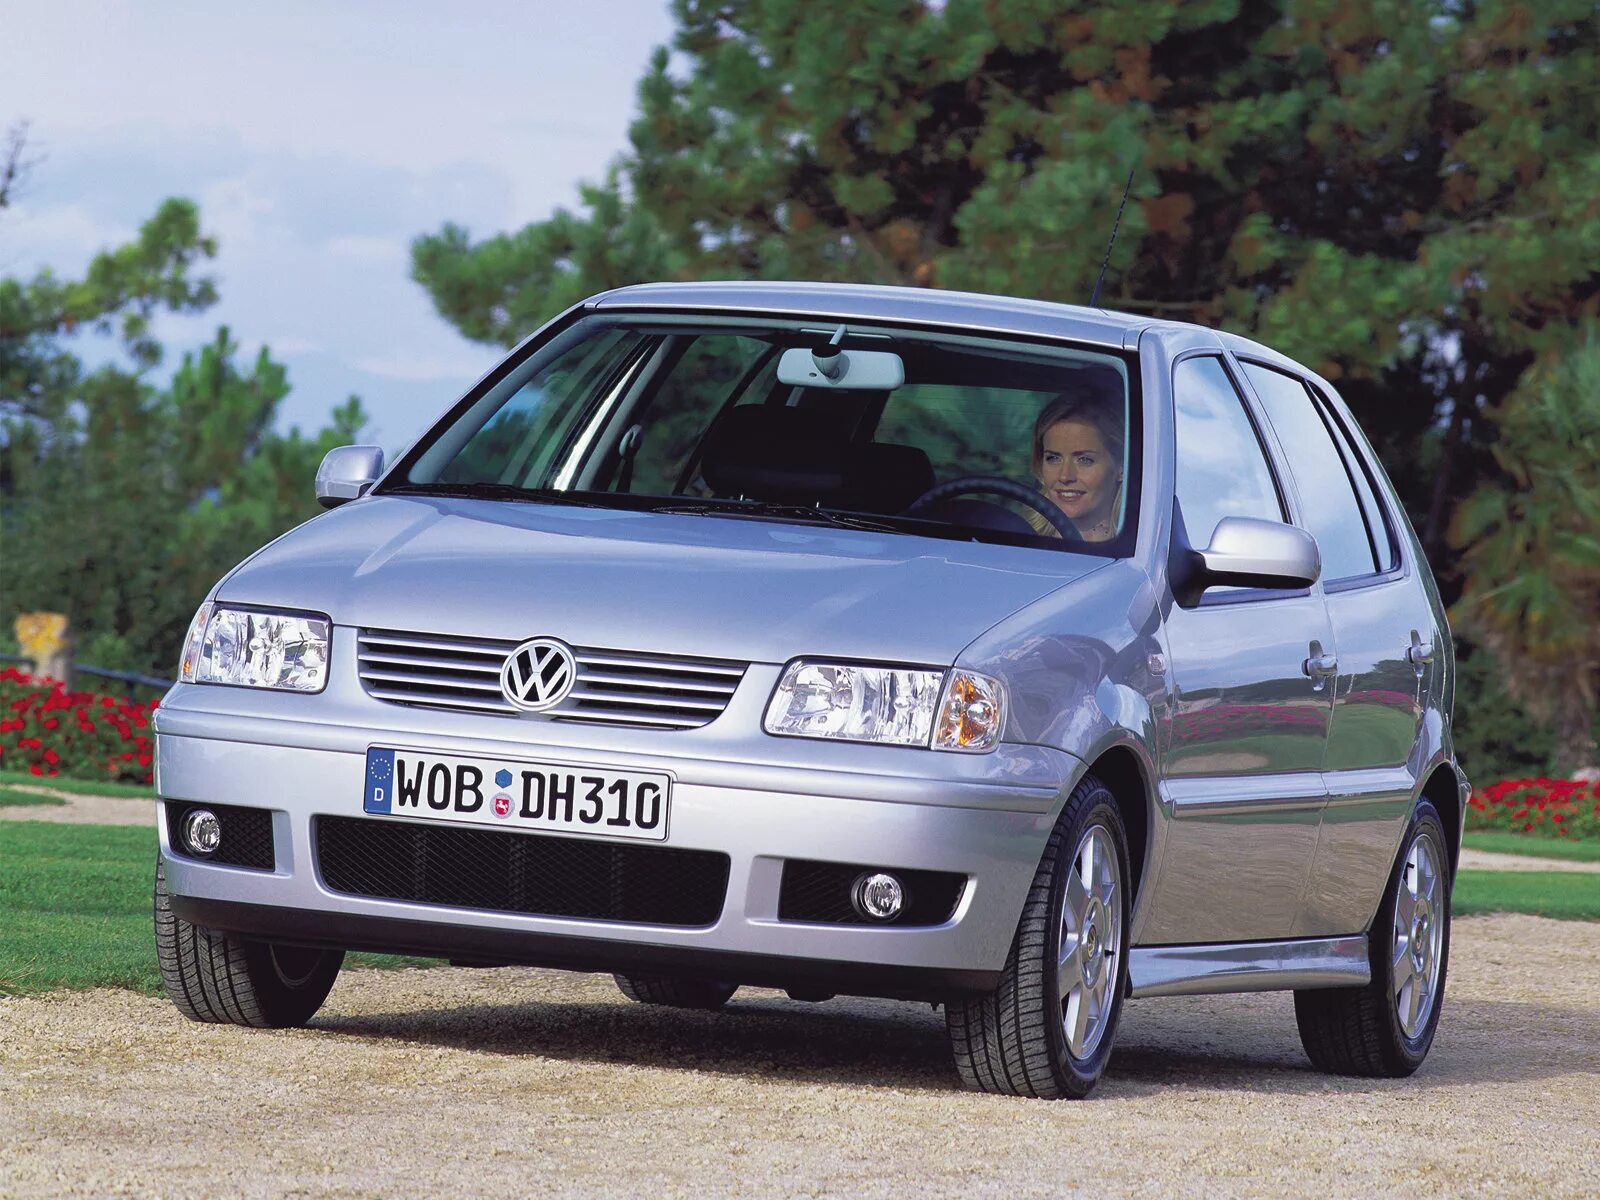 Volkswagen Polo 2001 1.4 3 поколение. Фольксваген поло 1999 1.6. Volkswagen Polo 2001 Hatchback. Фольксваген поло 1999 1.4 хэтчбек.